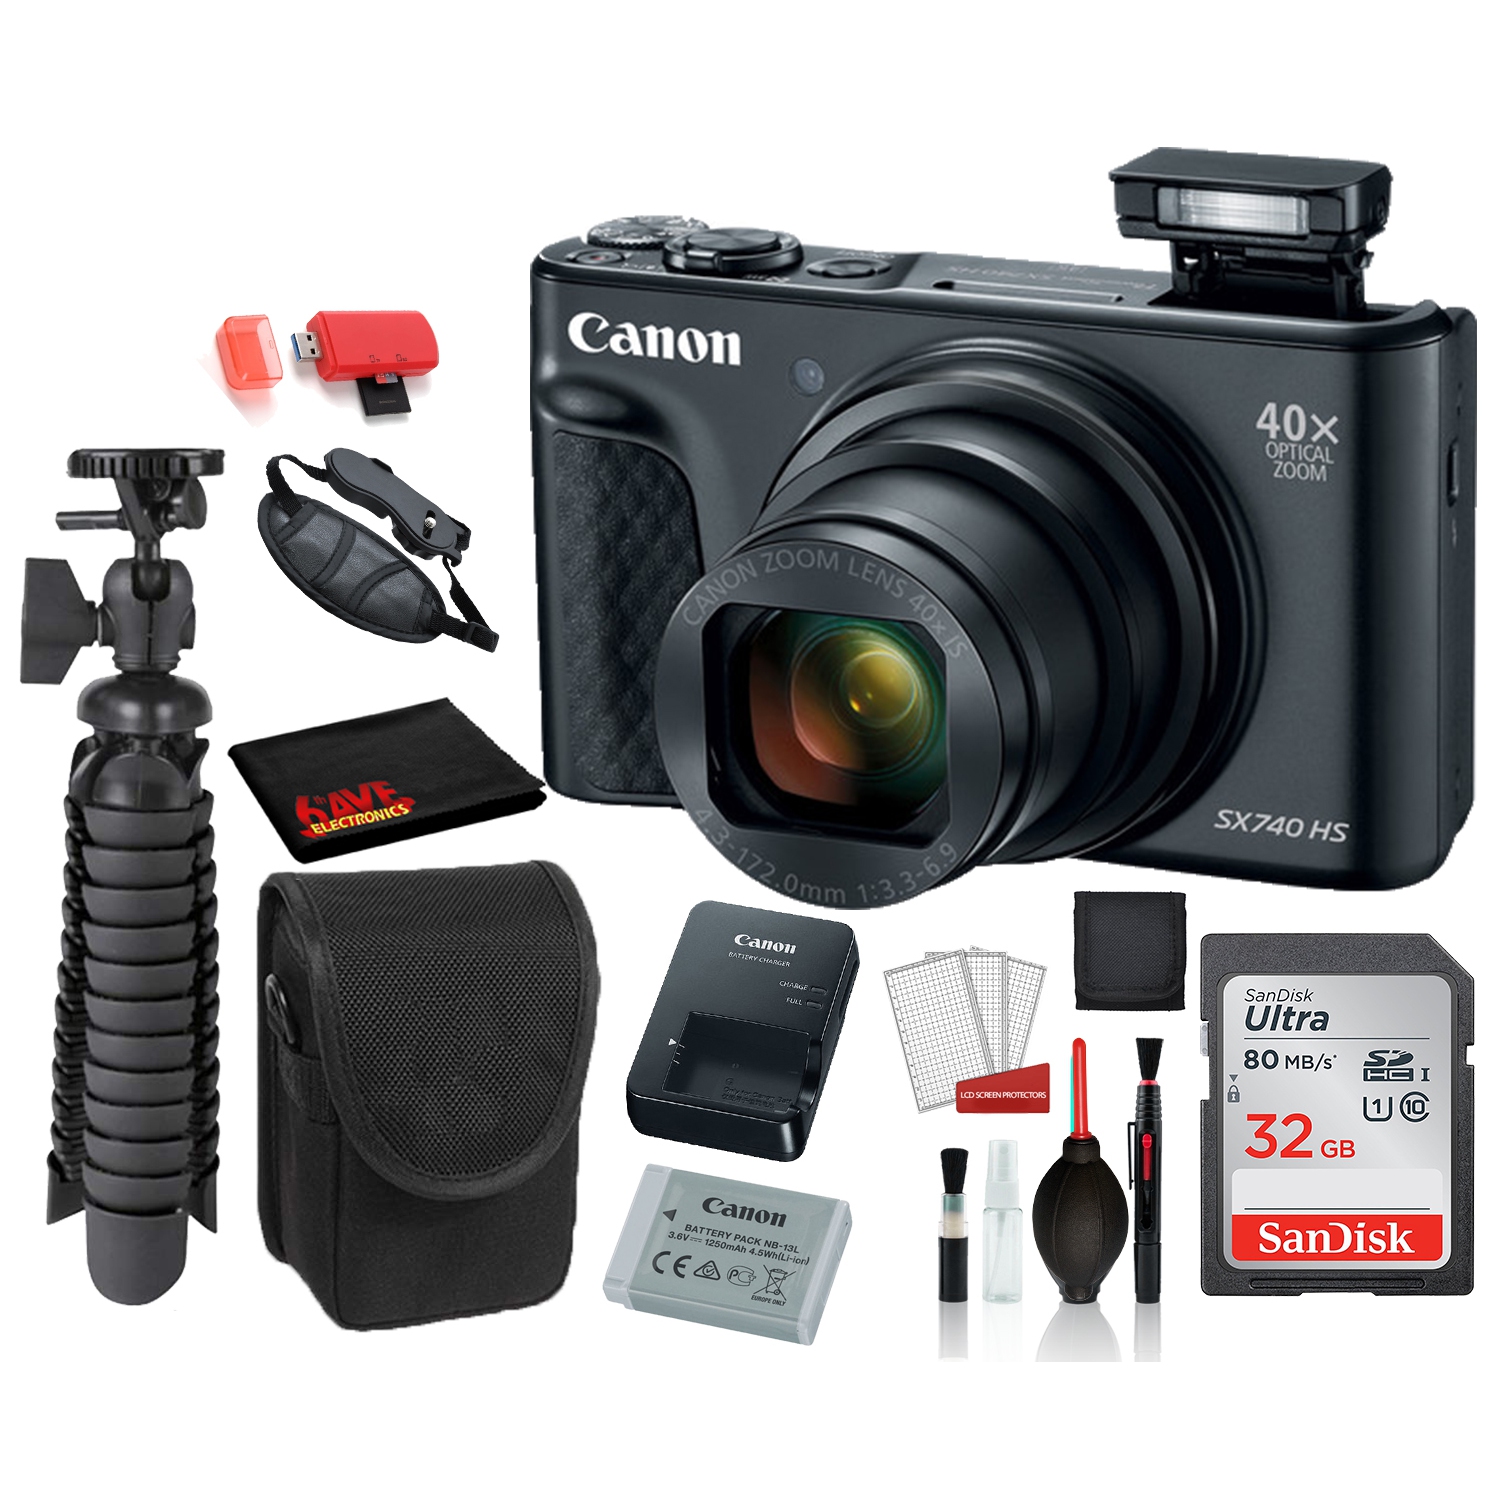 Canon PowerShot SX740 HS Digital Camera (Black) with SanDisk 32gb SD card + Camera Case + 12 Tripod Base Bundle